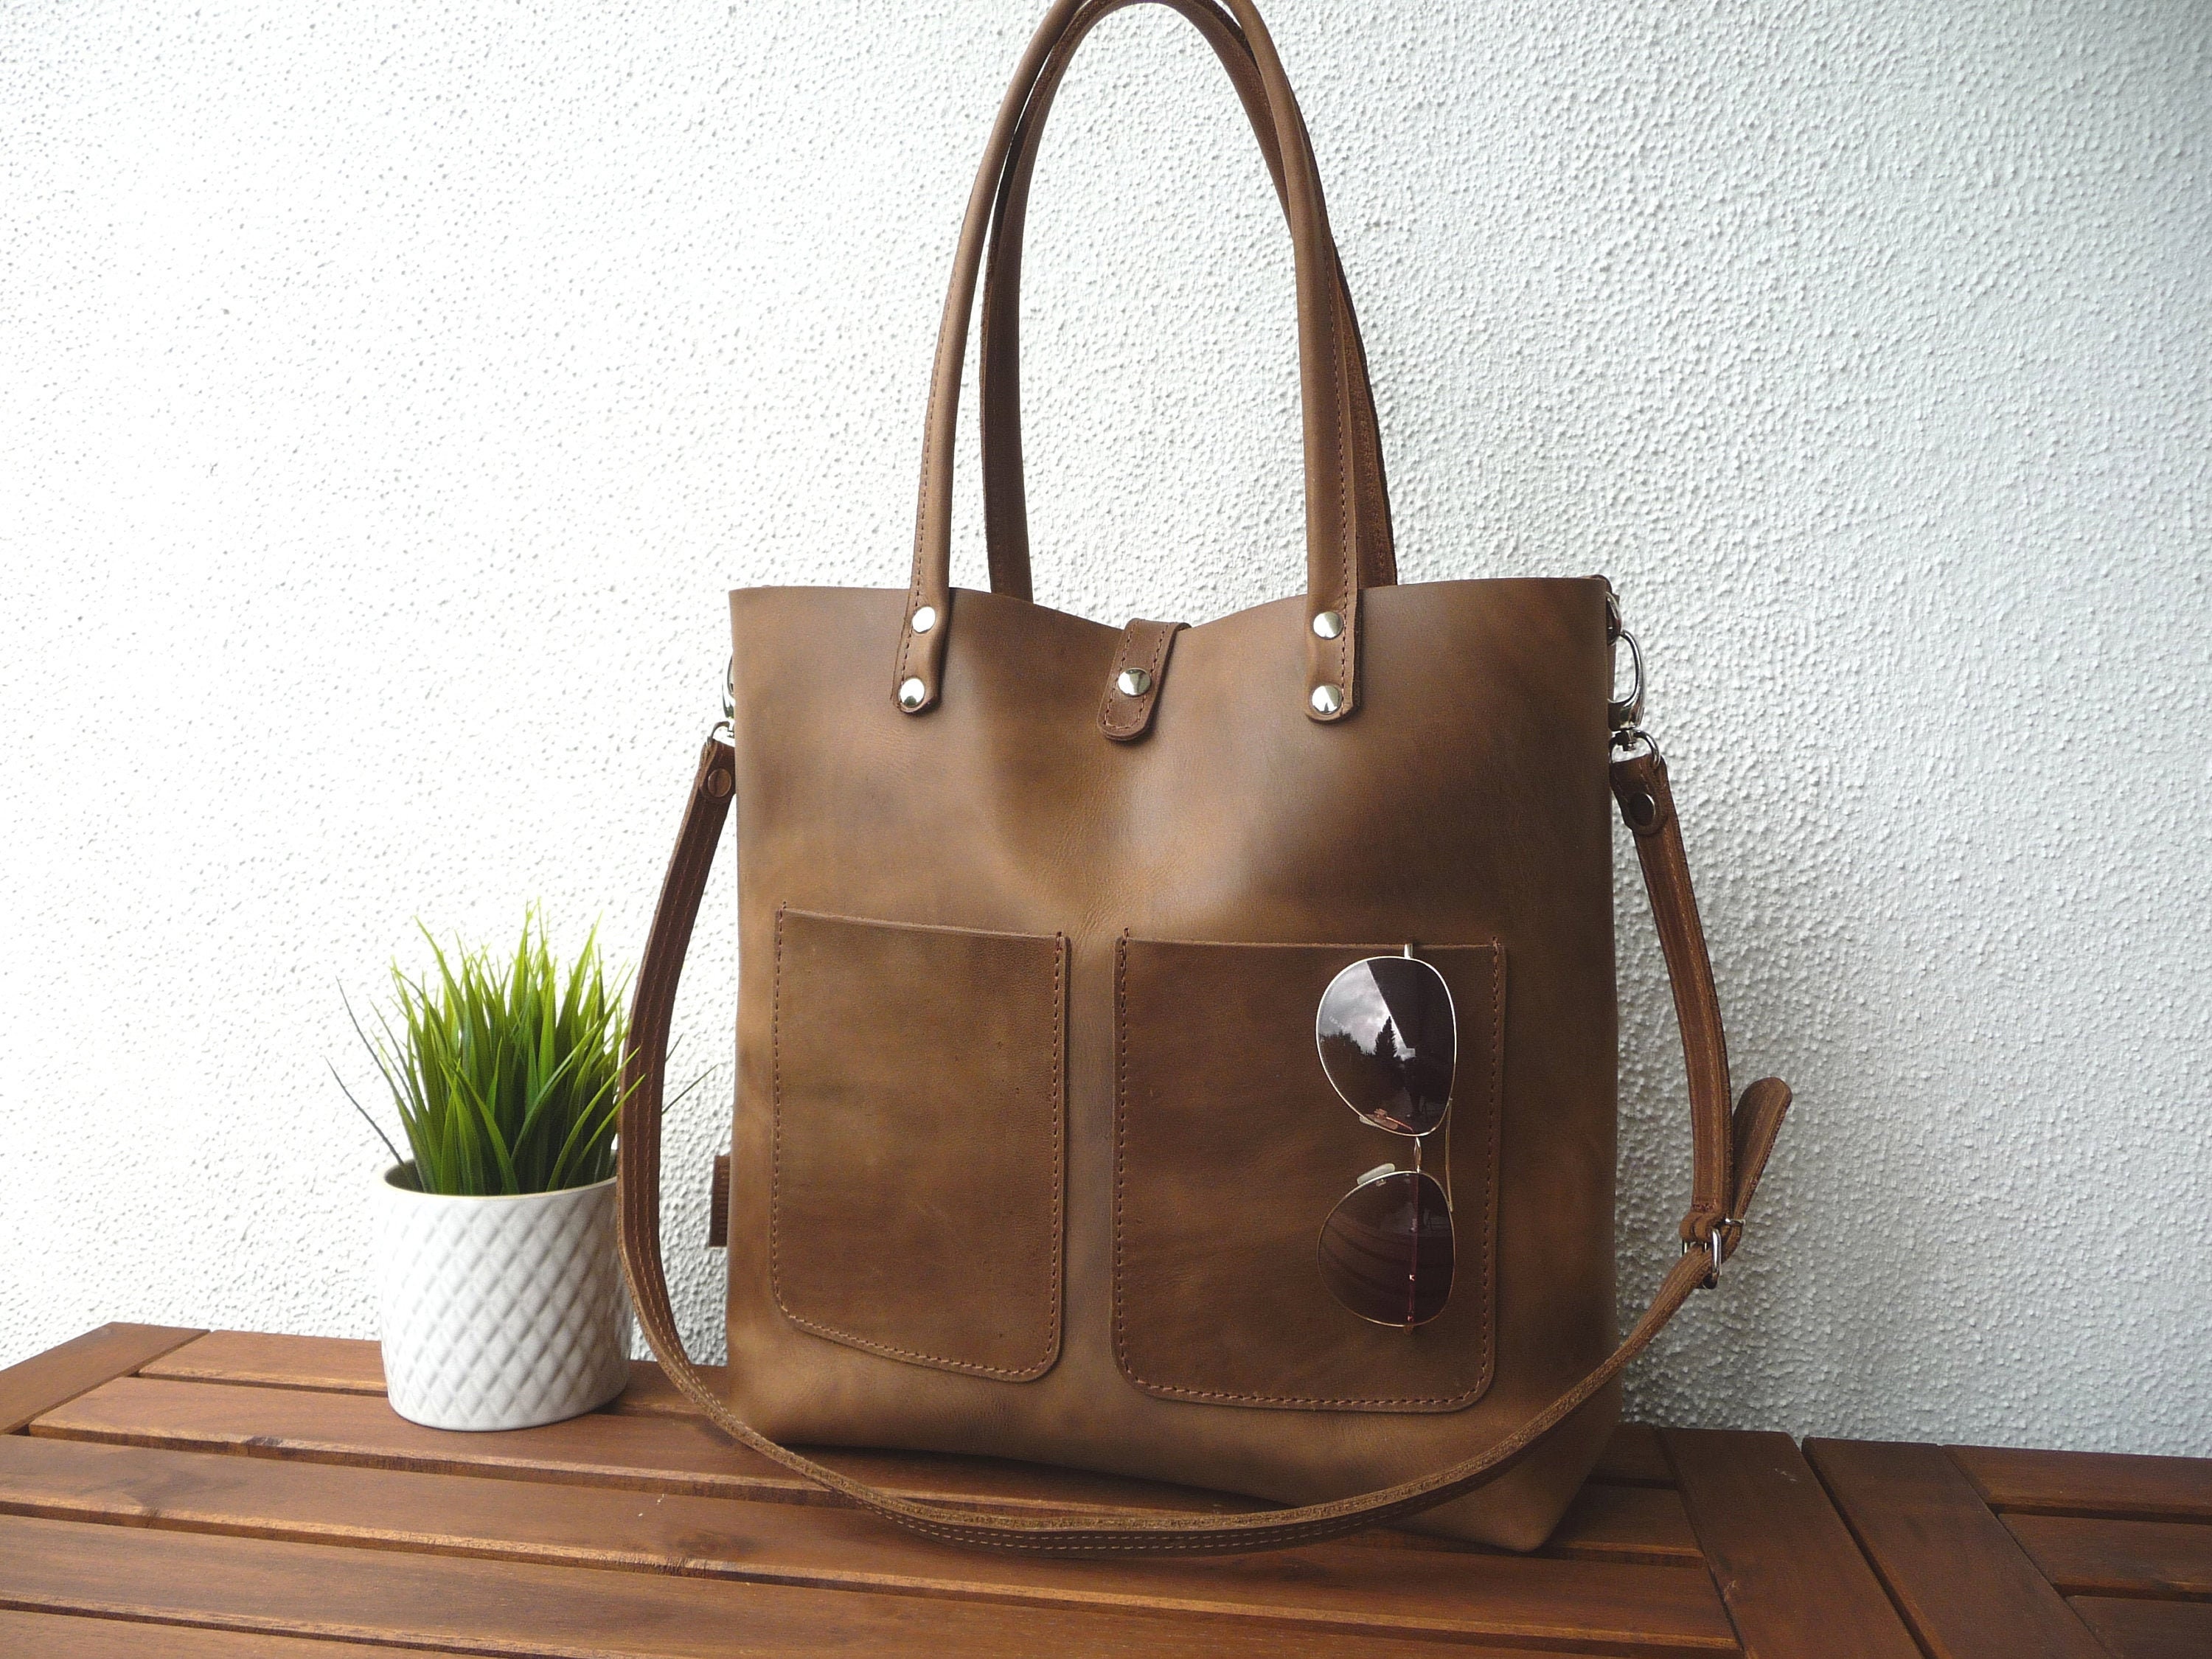 HANDBAG Leather bag cowhide full grain leather bag woman | Etsy